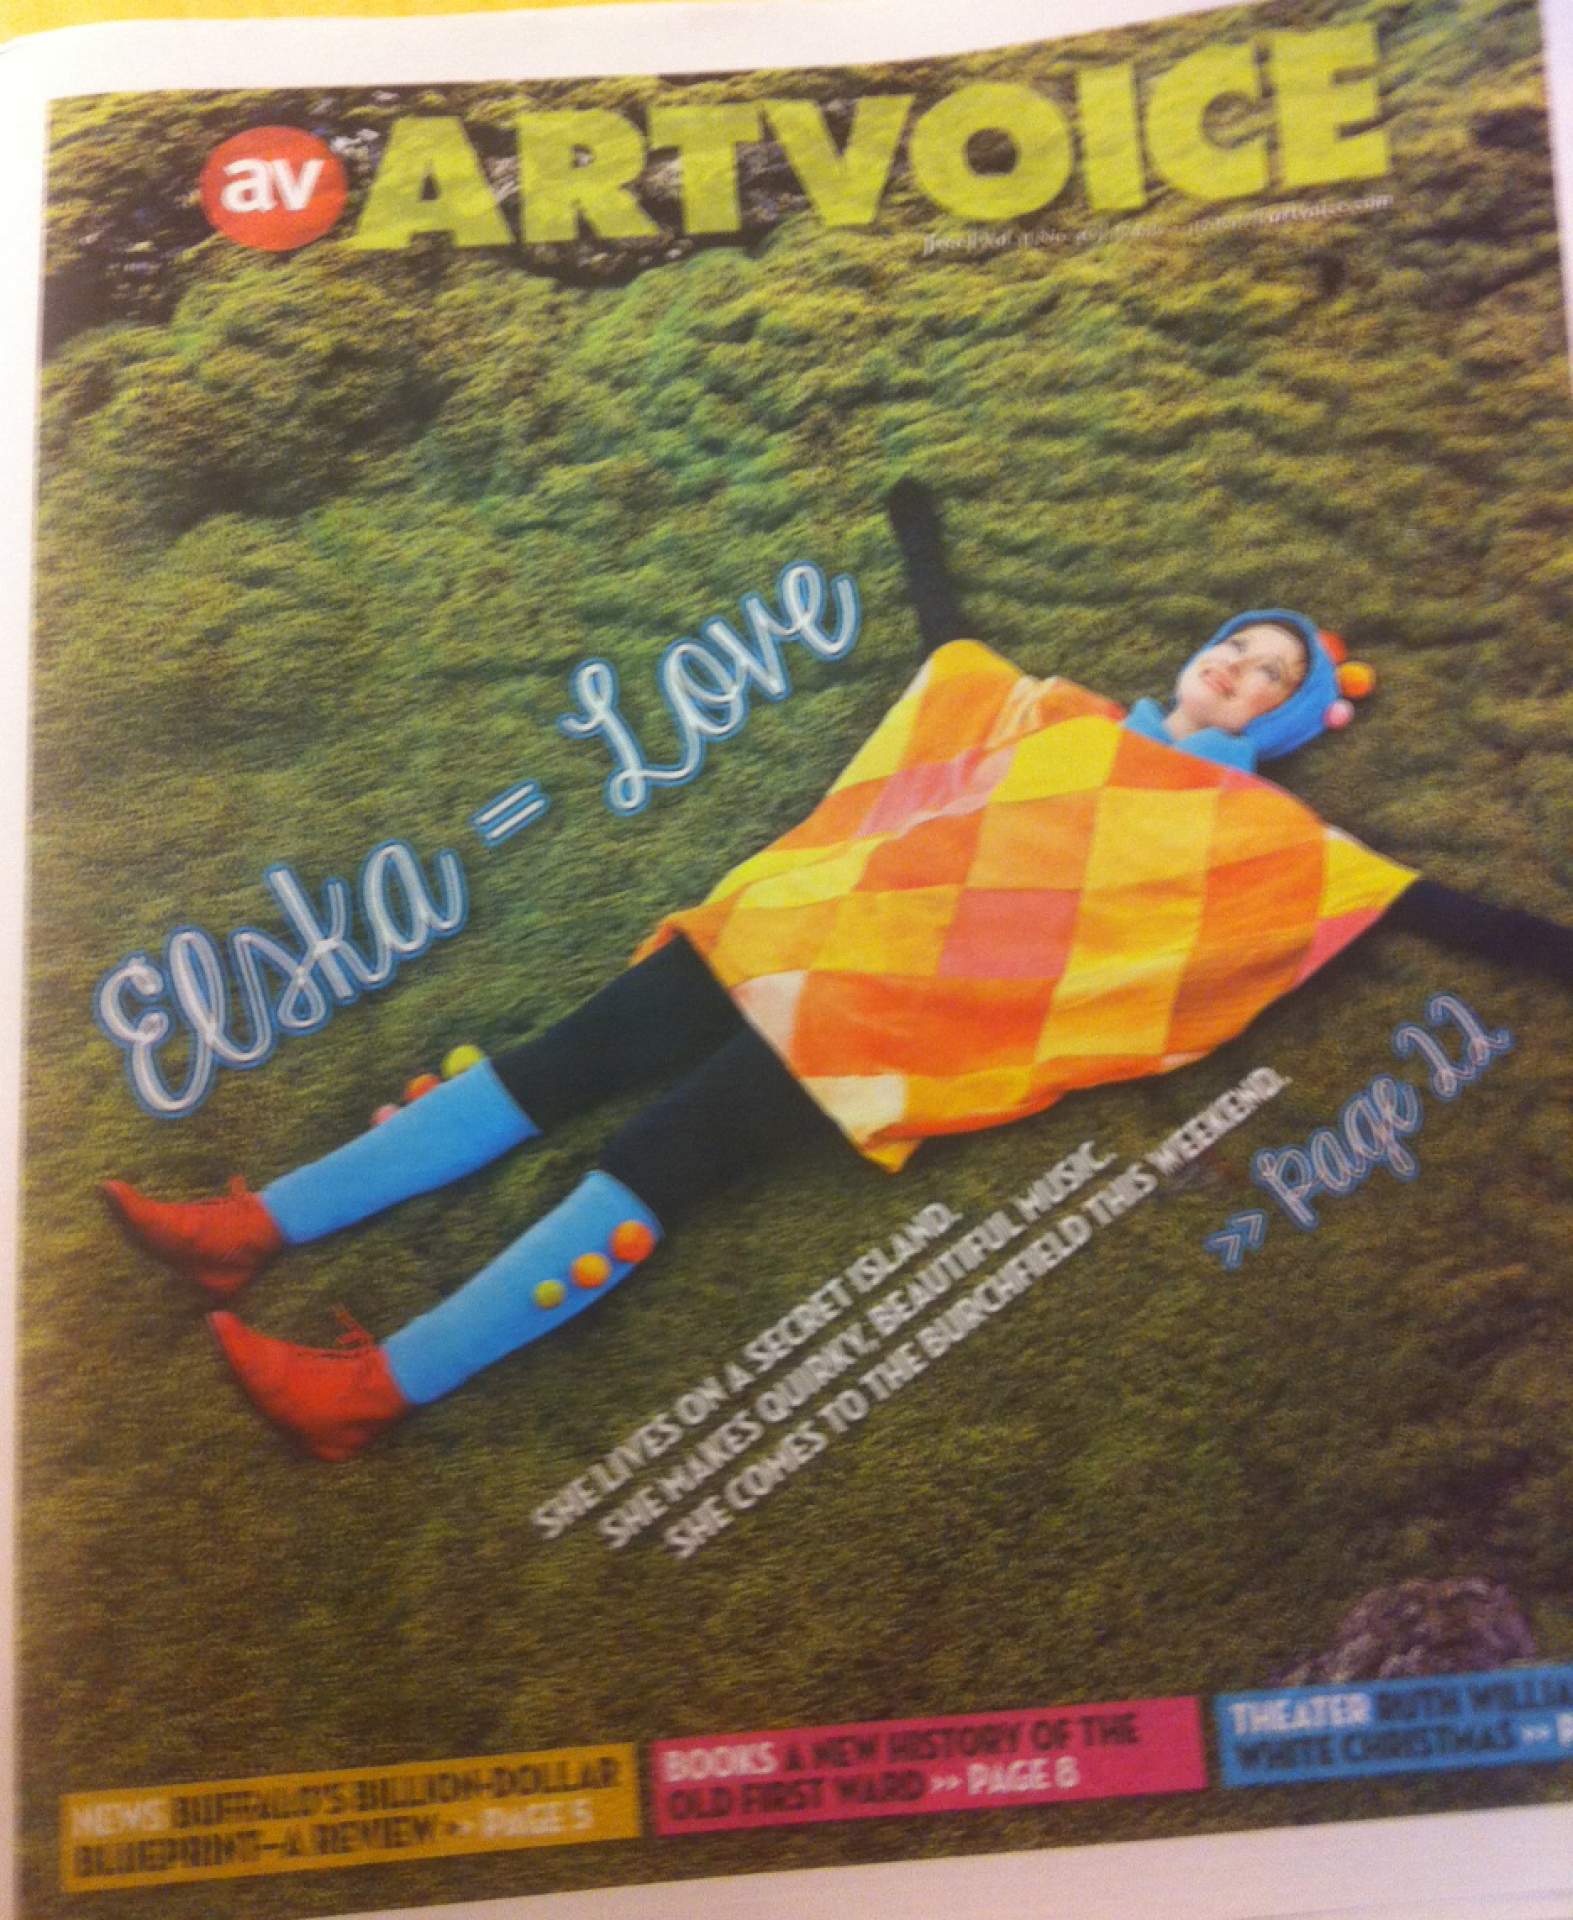 Elska is on the cover of Artvoice